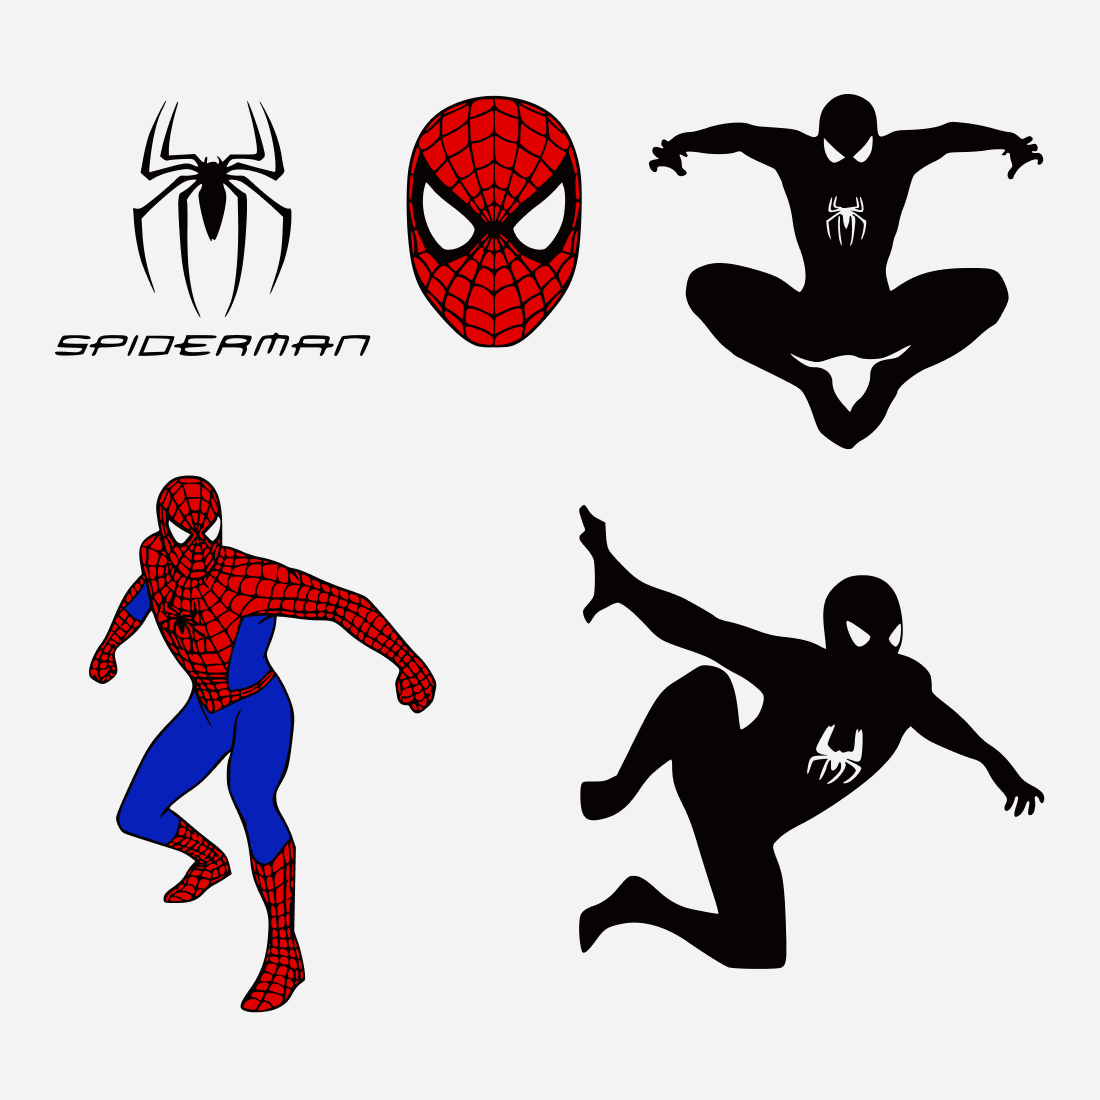 Classic spiderman v3 SVG.